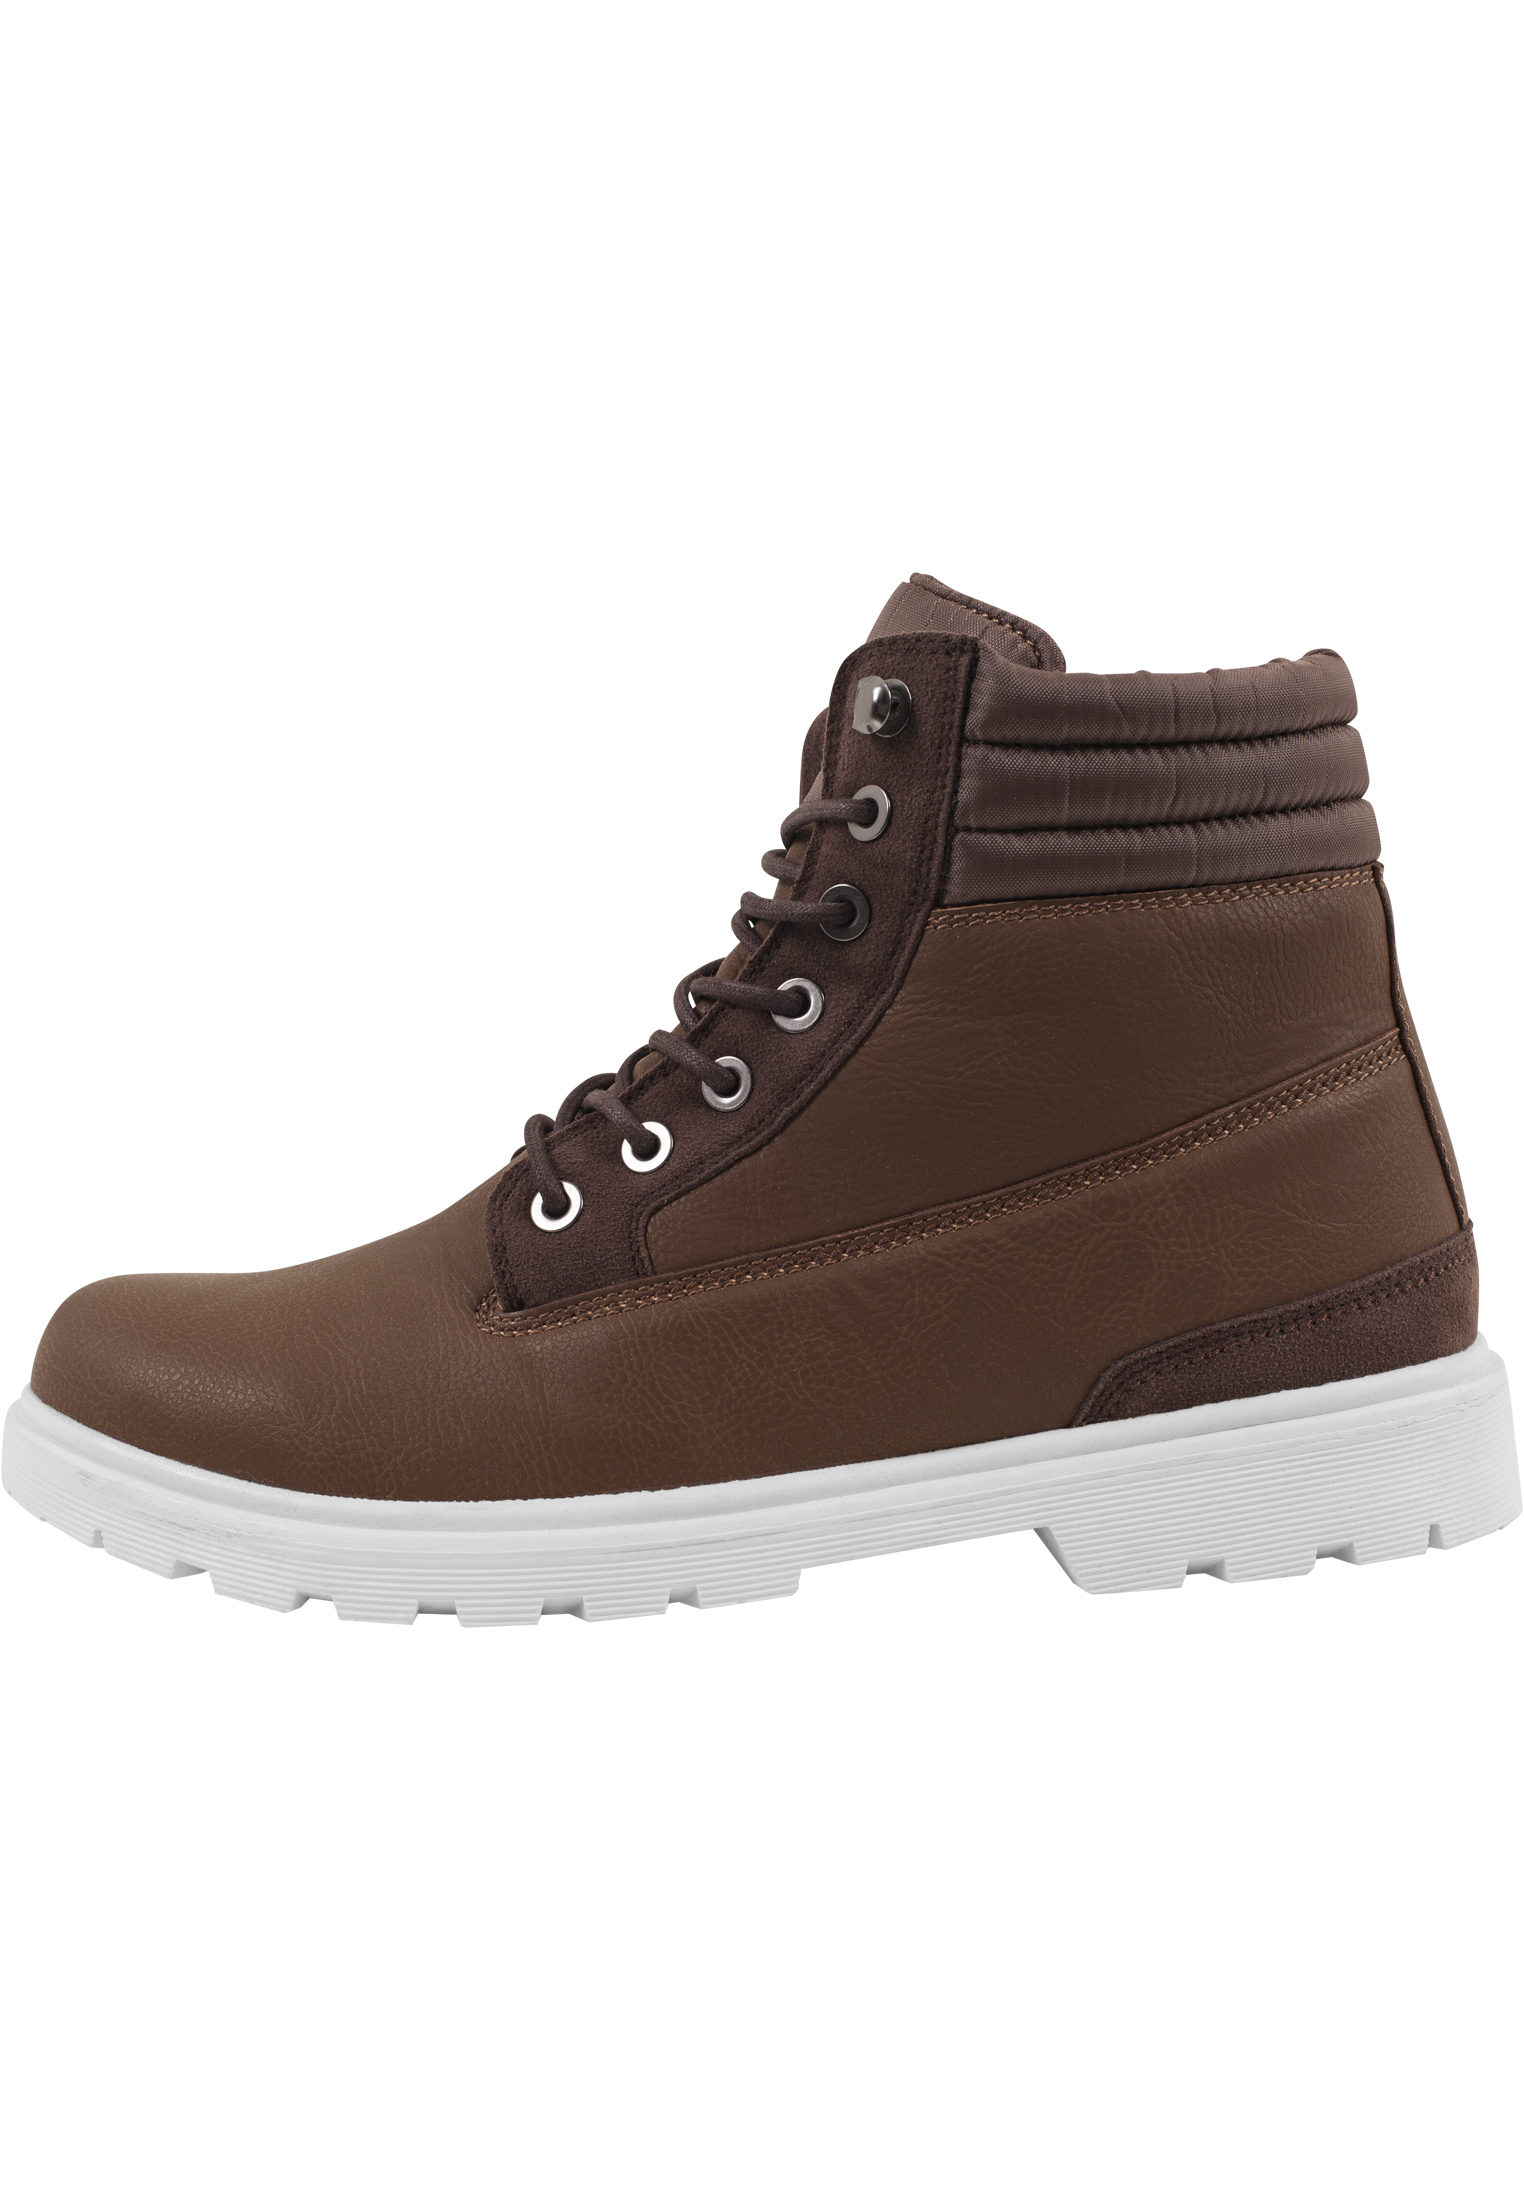 Schuhe Winter Boots in Farbe brown/darkbrown